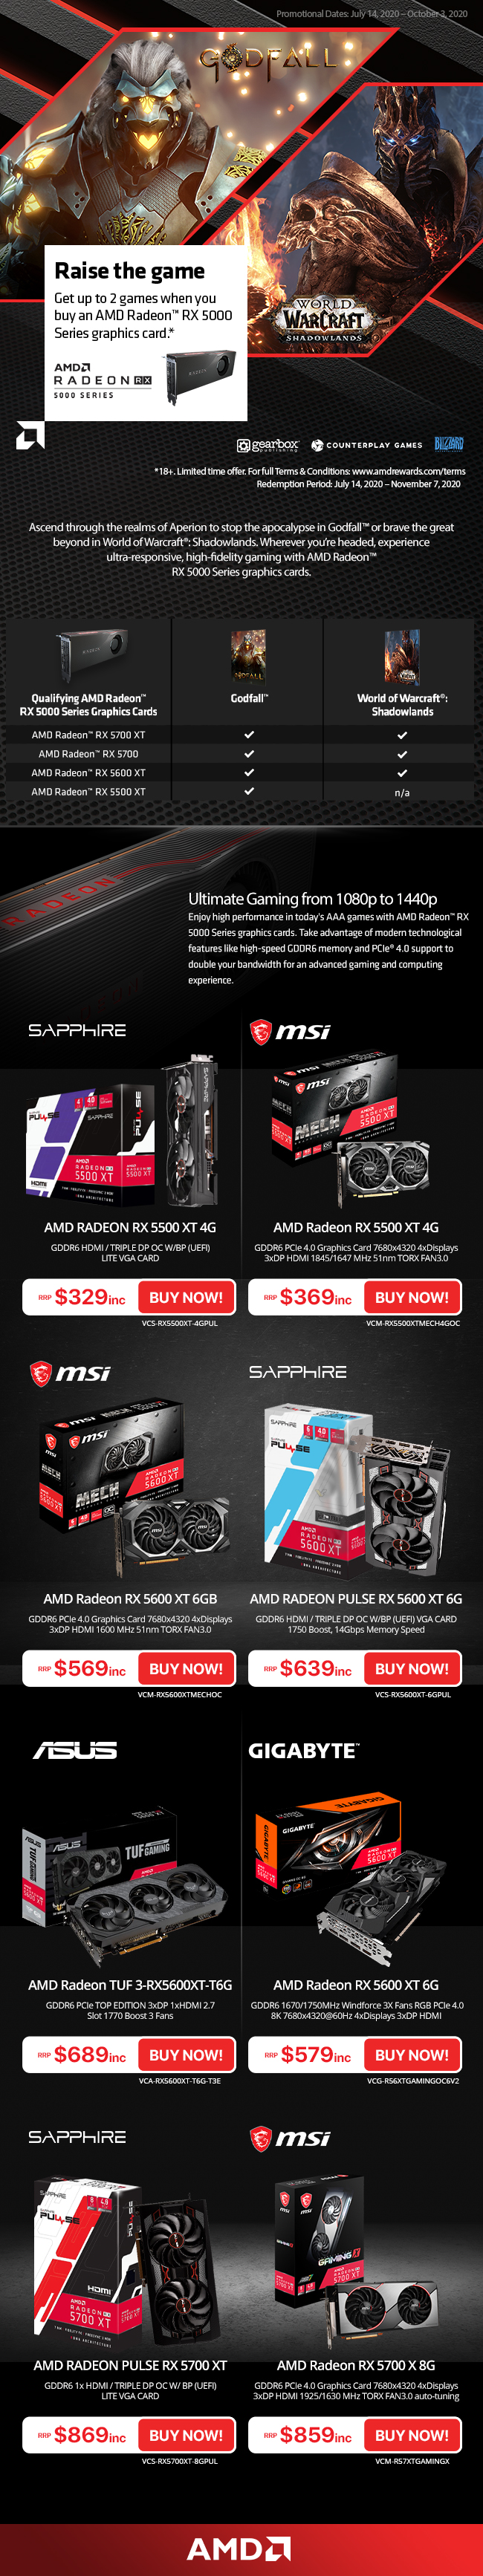 AMD Raise The Game